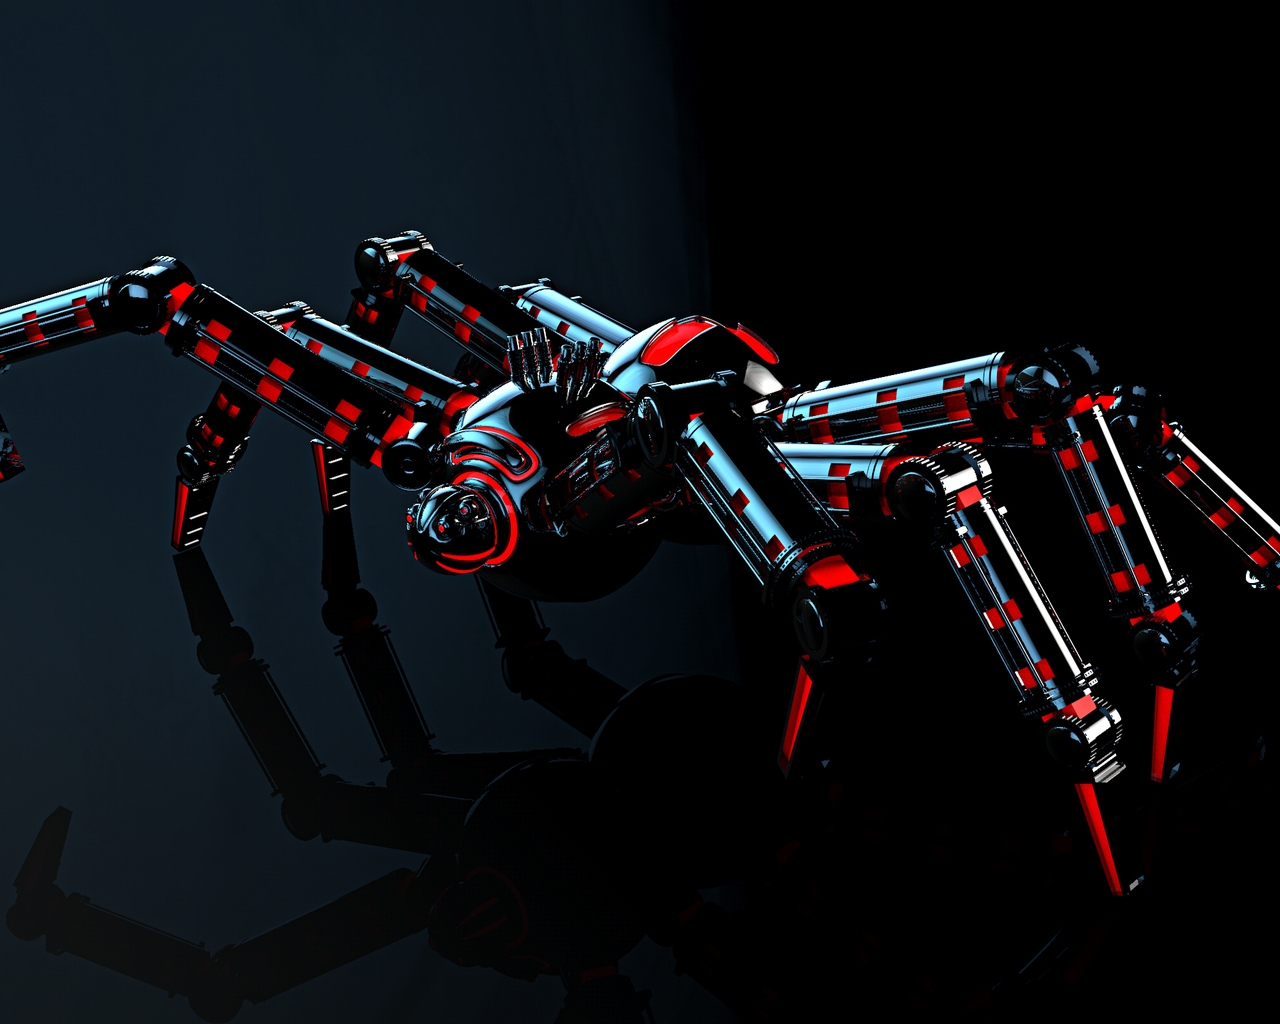 Spider Robot for 1280 x 1024 resolution